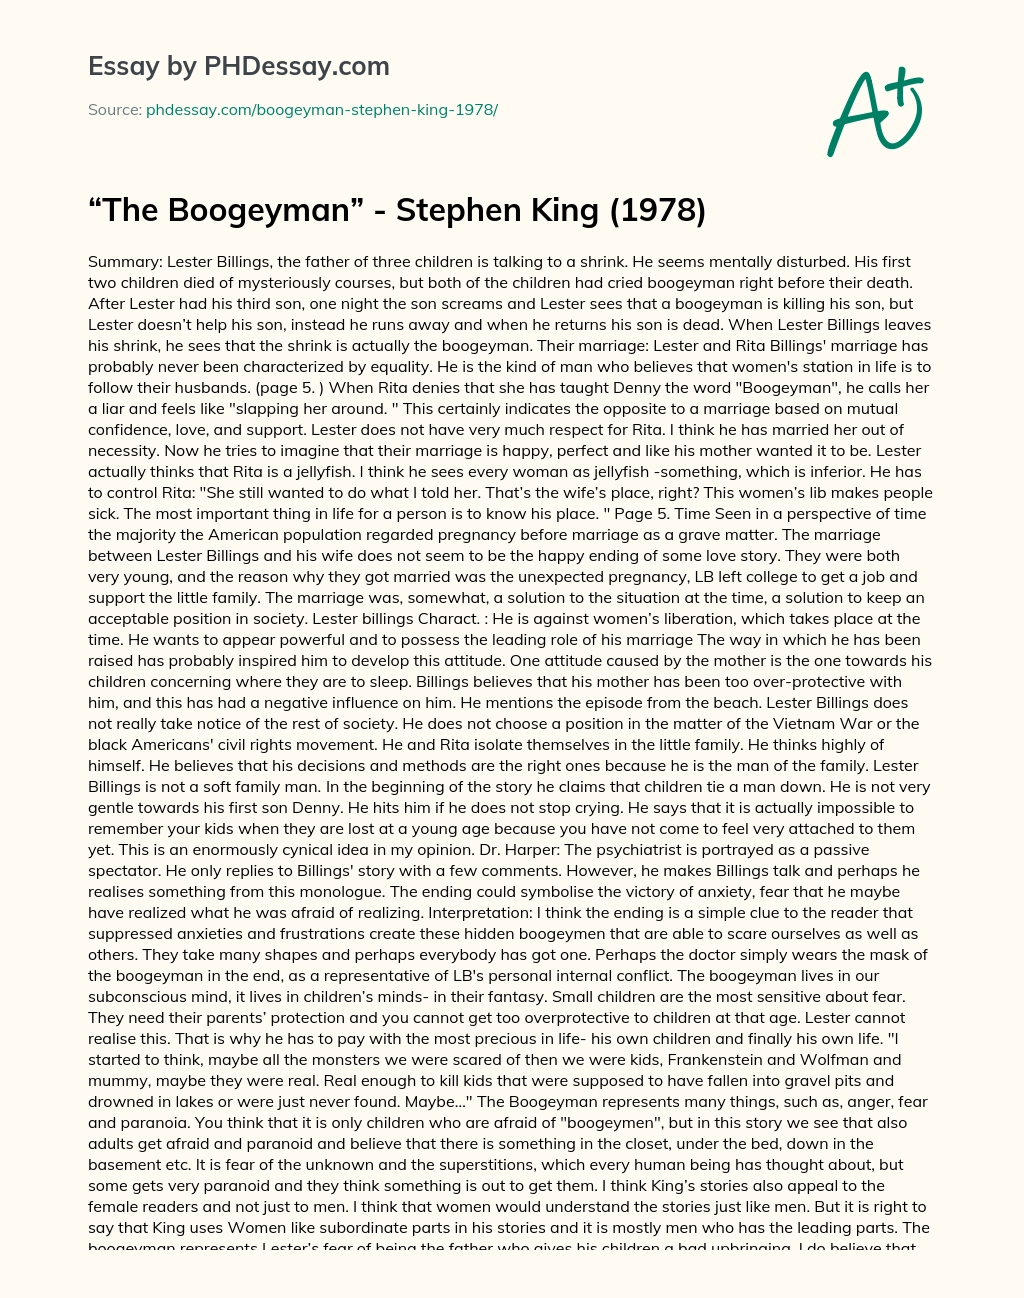 The Boogeyman – Stephen King (1978) essay